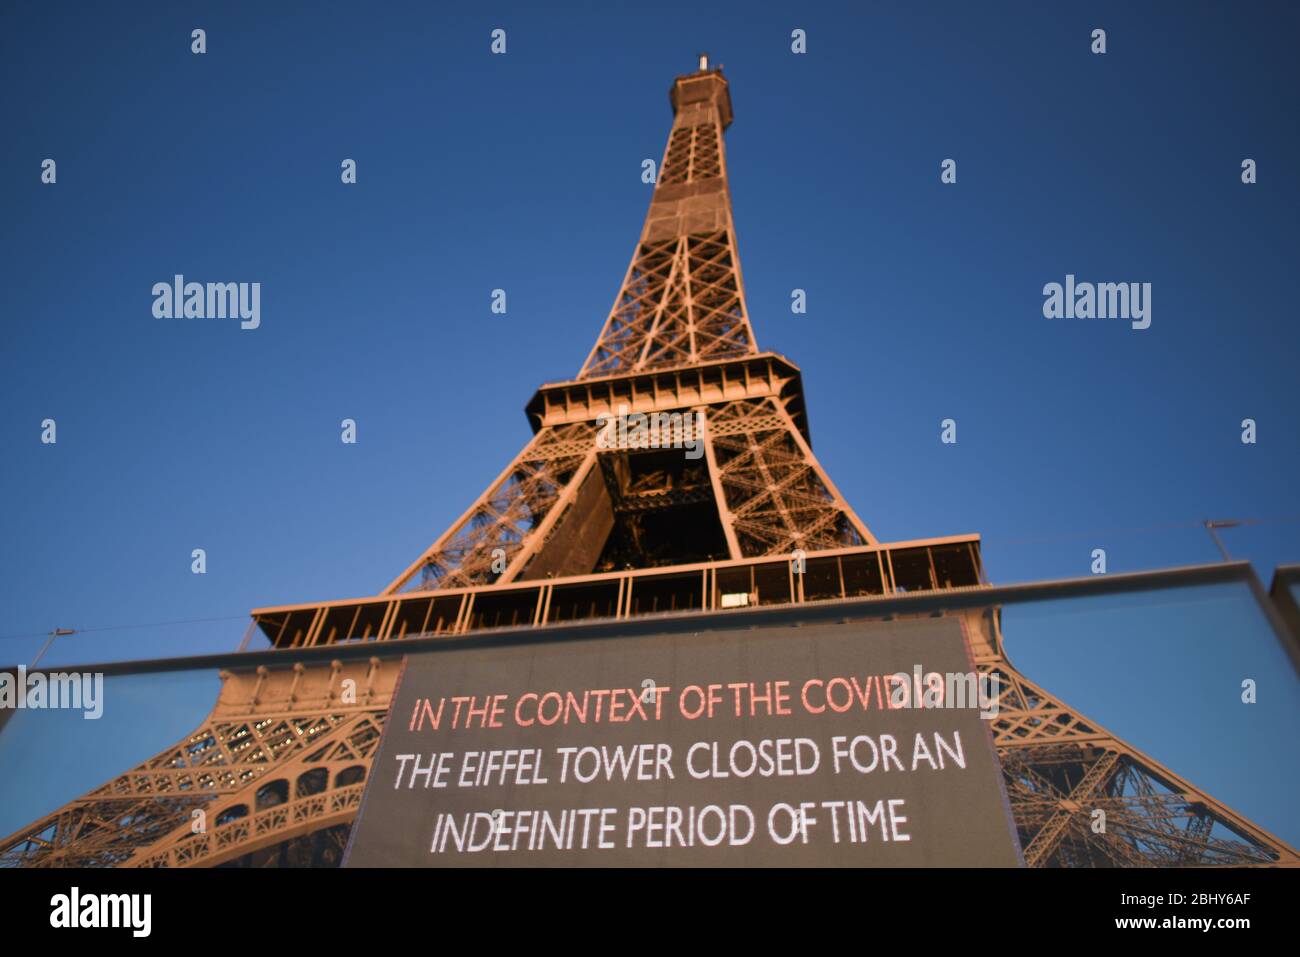 *** STRICTLY NO SALES TO FRENCH MEDIA OR PUBLISHERS - RIGHTS RESERVED ***April 26, 2020 - Paris, France: A message related to the Covid-19 crisis on the Eiffel tower, which has been closed because of the lockdown. The message in English, for tourists, reads: 'in the contexte of the covid19, the Eiffel tower closed for an indefinite period of time'. Un message lie a la crise sanitaire du coronavirus sur la tour Eiffel, qui a ete fermee pour la duree du confinement. Ce message en anglais pour les touristes annonce que le monument est ferme pour une periode indeterminee du fait du Covid19. Stock Photo